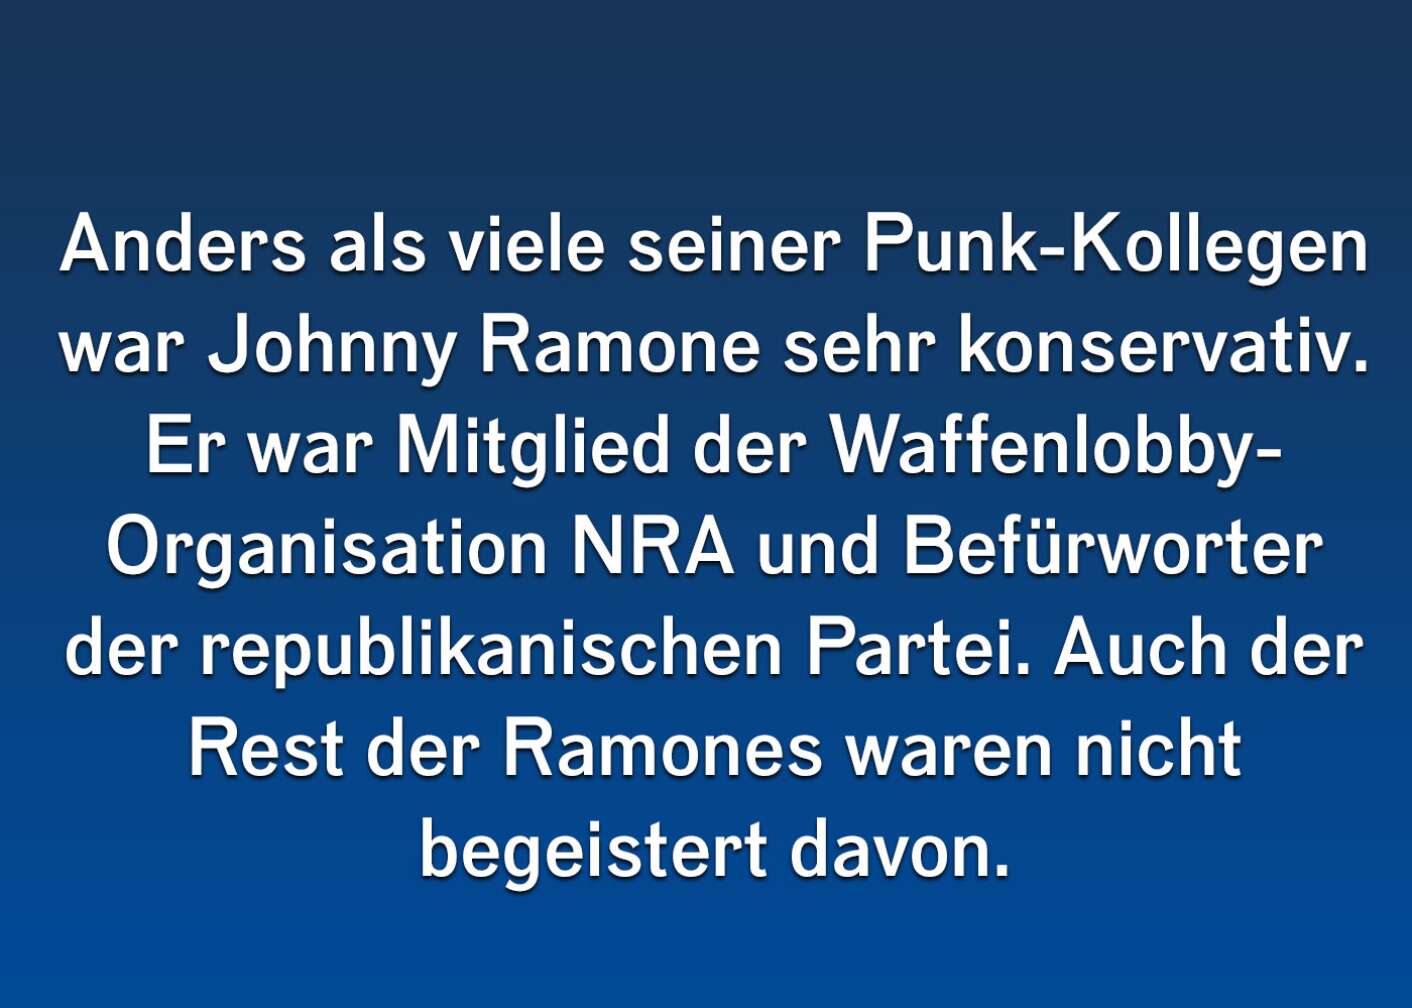 Ramones Facts